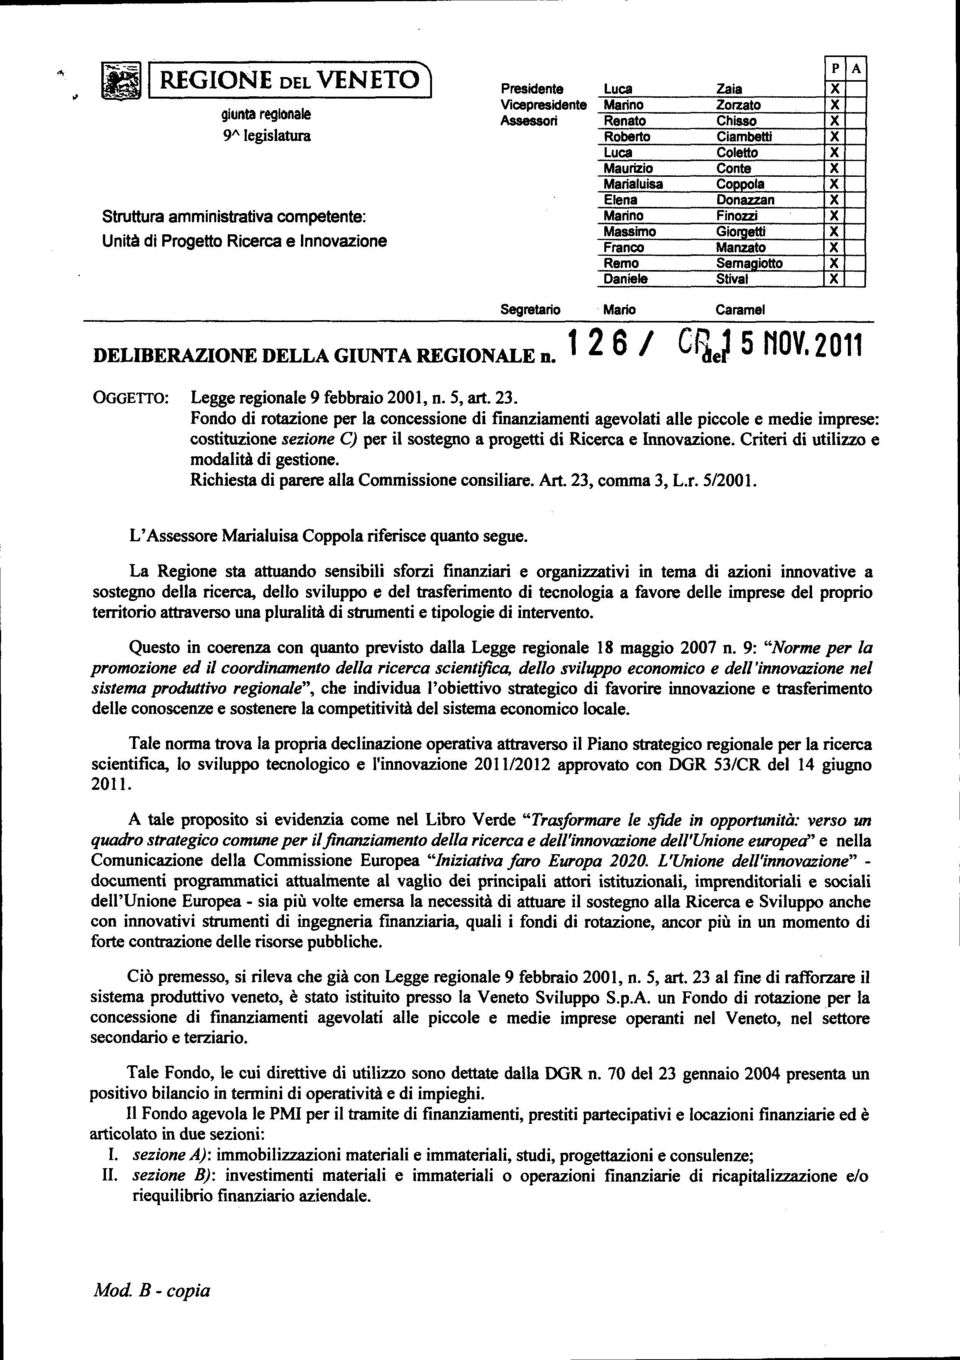 Mario Caramel DELIBERAZIONE DELLA GIUNTA REGIONALE n.126/ cysnov.zoii OGGETTO: Legge regionale 9 febbraio 2001, n. 5, art. 23.